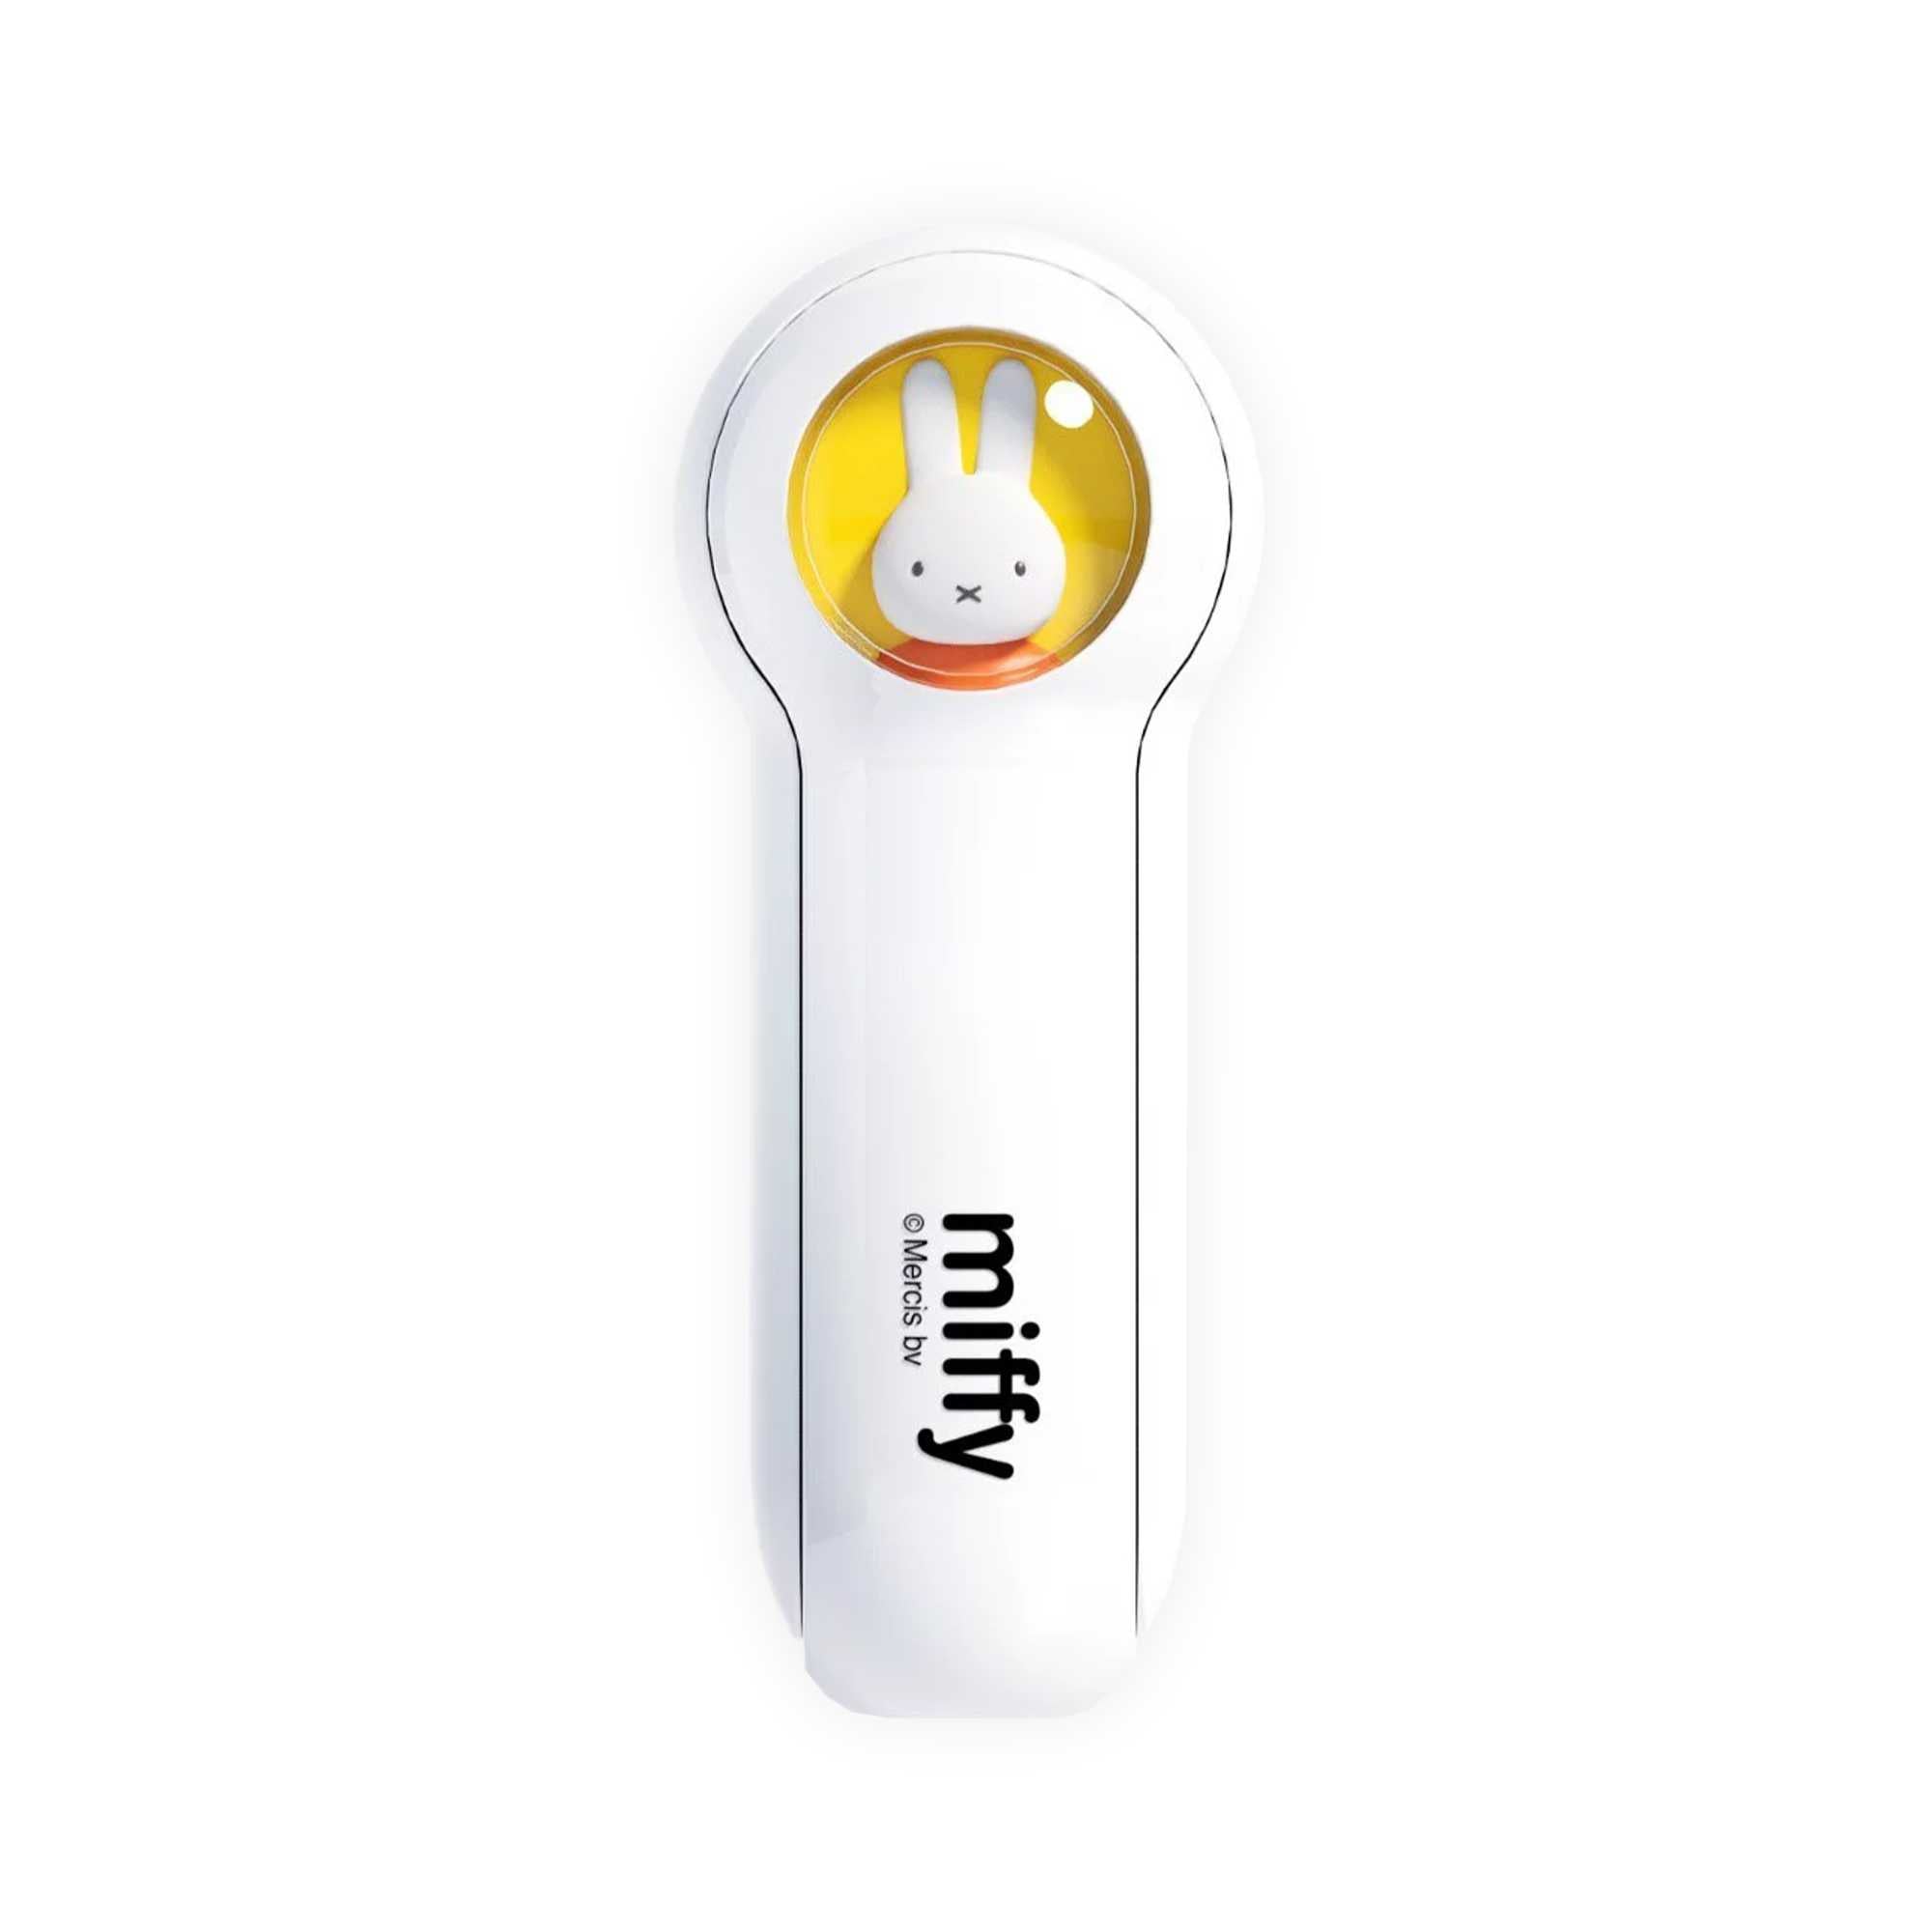 Miffy usb-c mini fan, yellow